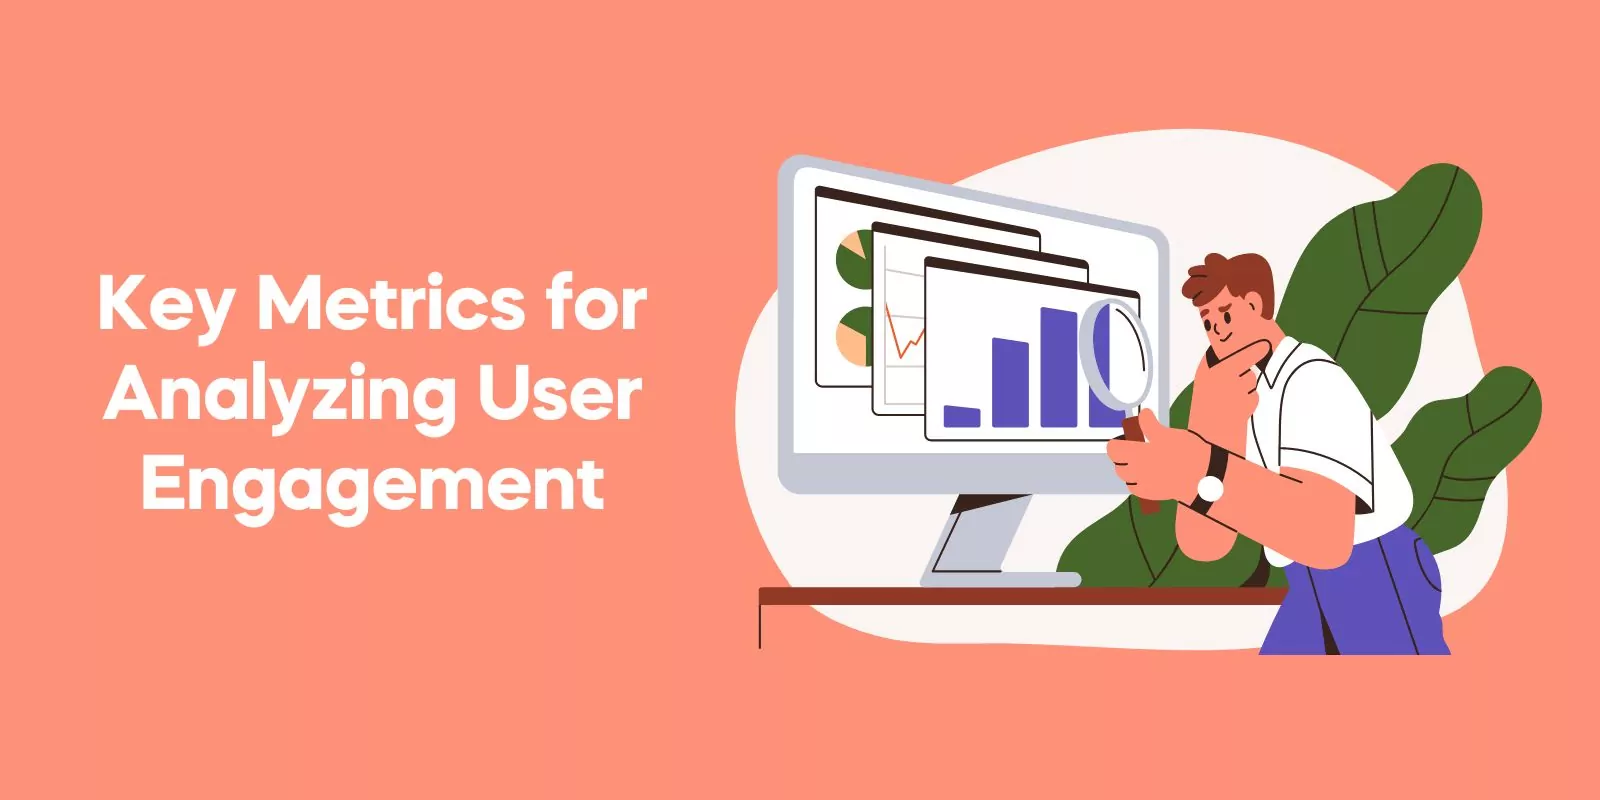 Key Metrics for Analyzing User Engagement